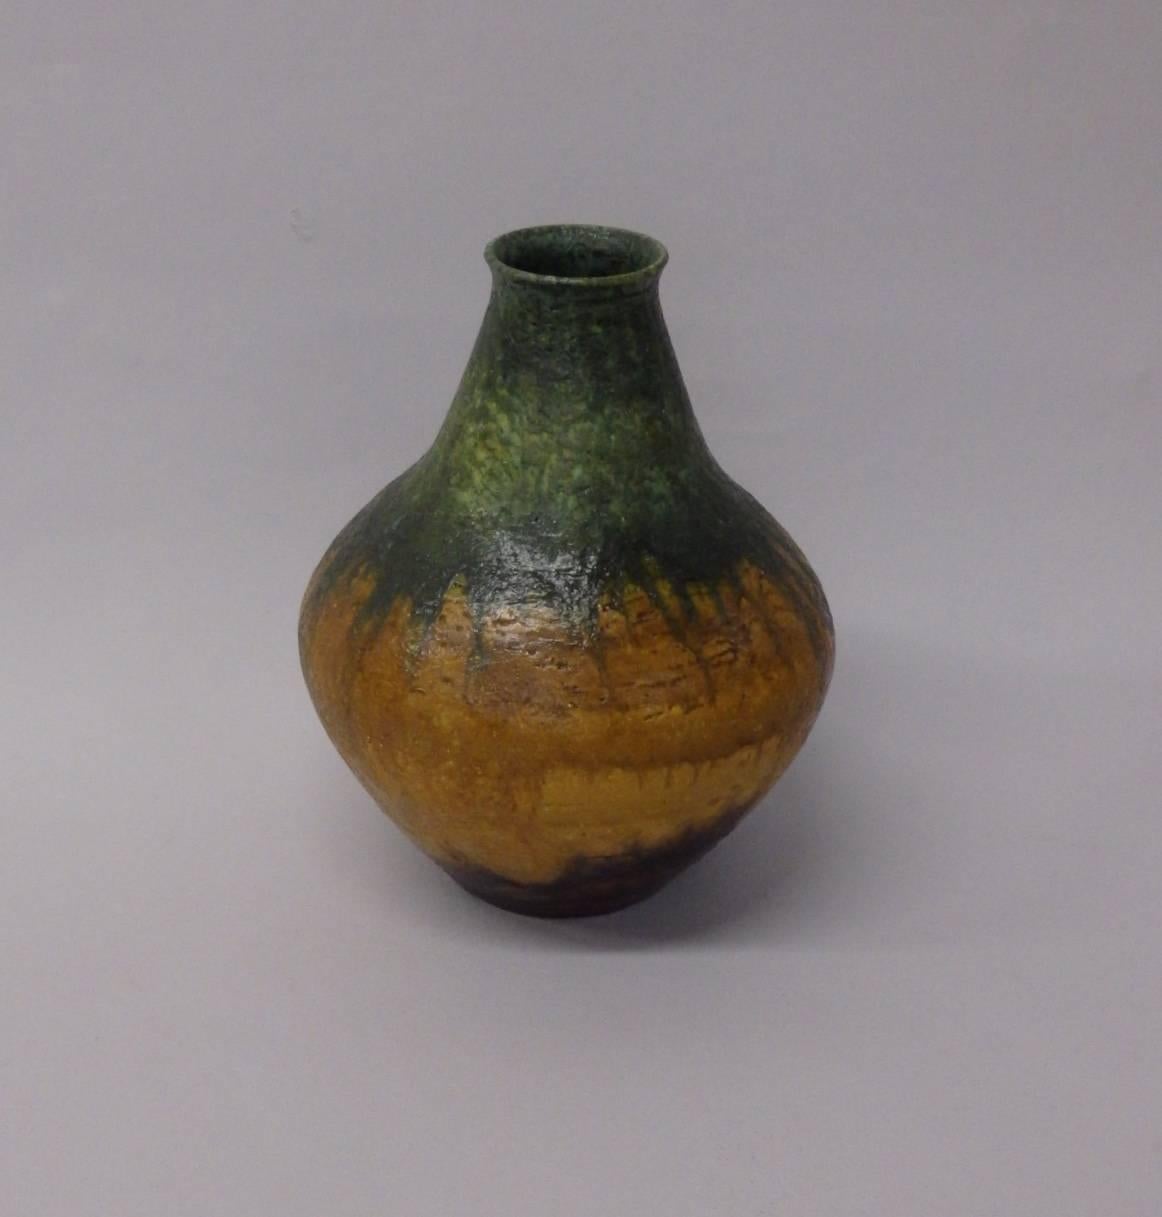 Italian ceramic vase by Marcello Fantoni. Green and mustard glaze on bulbous form.